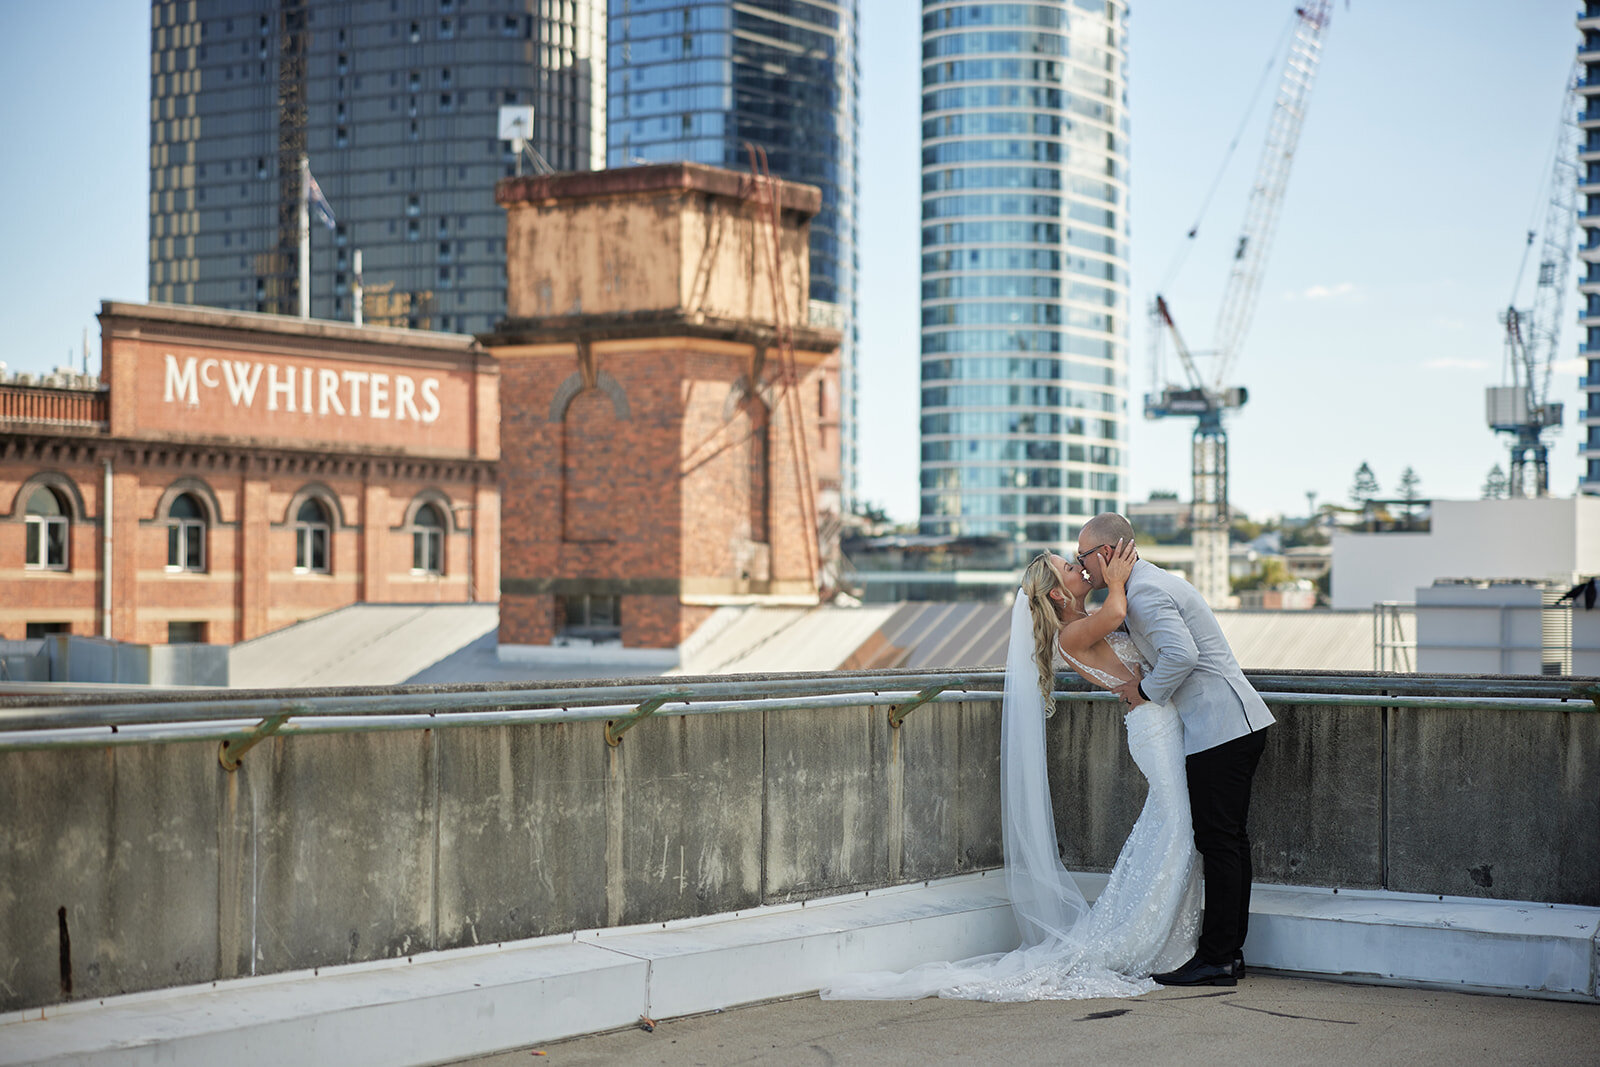 Brisbanes-best-wedding-photographer-the-perfect-kiss